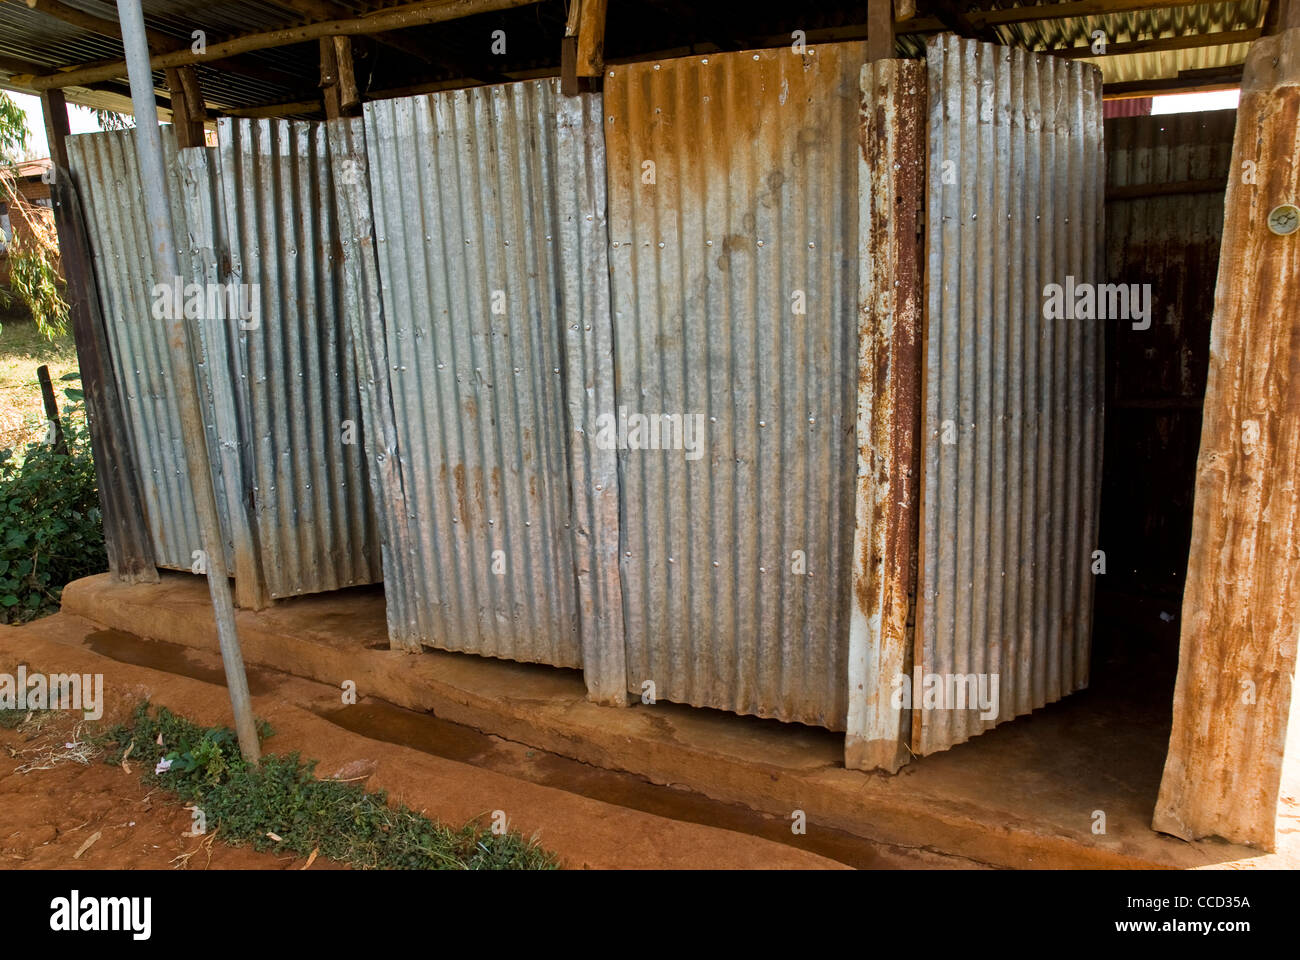 The outside Toilets at Nekemte Hospital in Ethiopia on February 6, 2009 in Nekempte, Ethiopia. Stock Photo